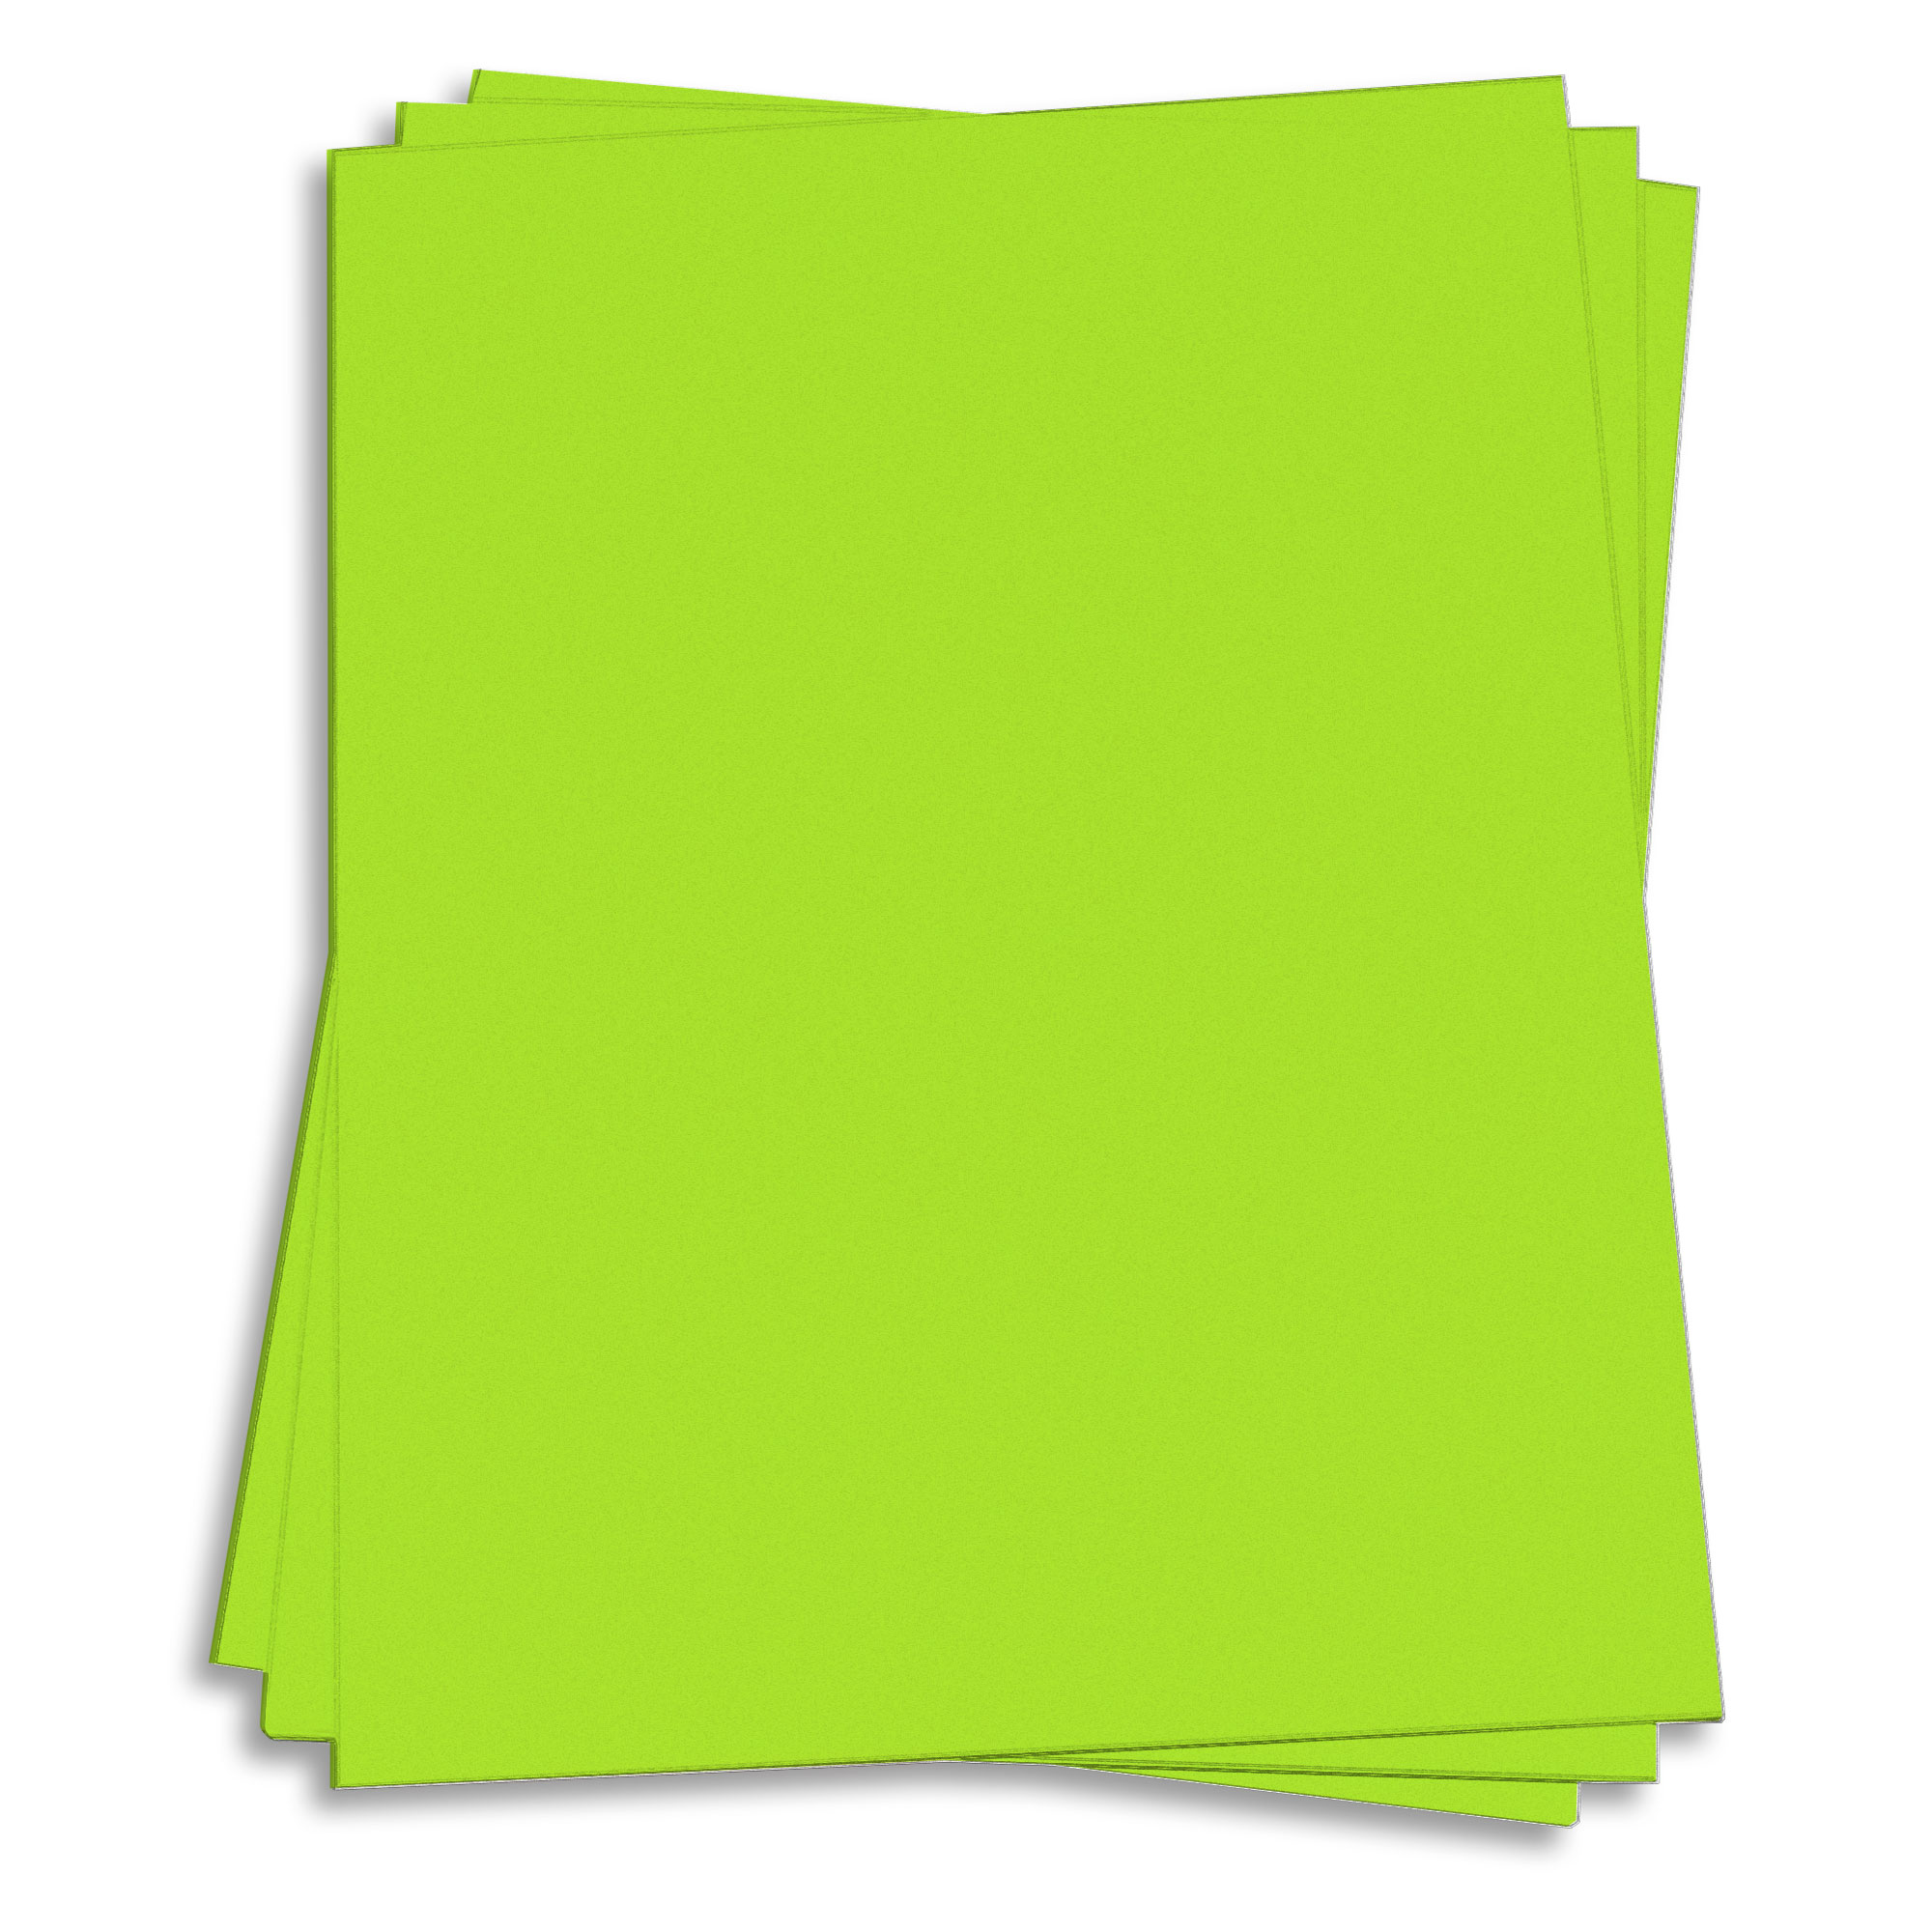 Vulcan Green Card Stock - 8 1/2 x 11 65lb Cover